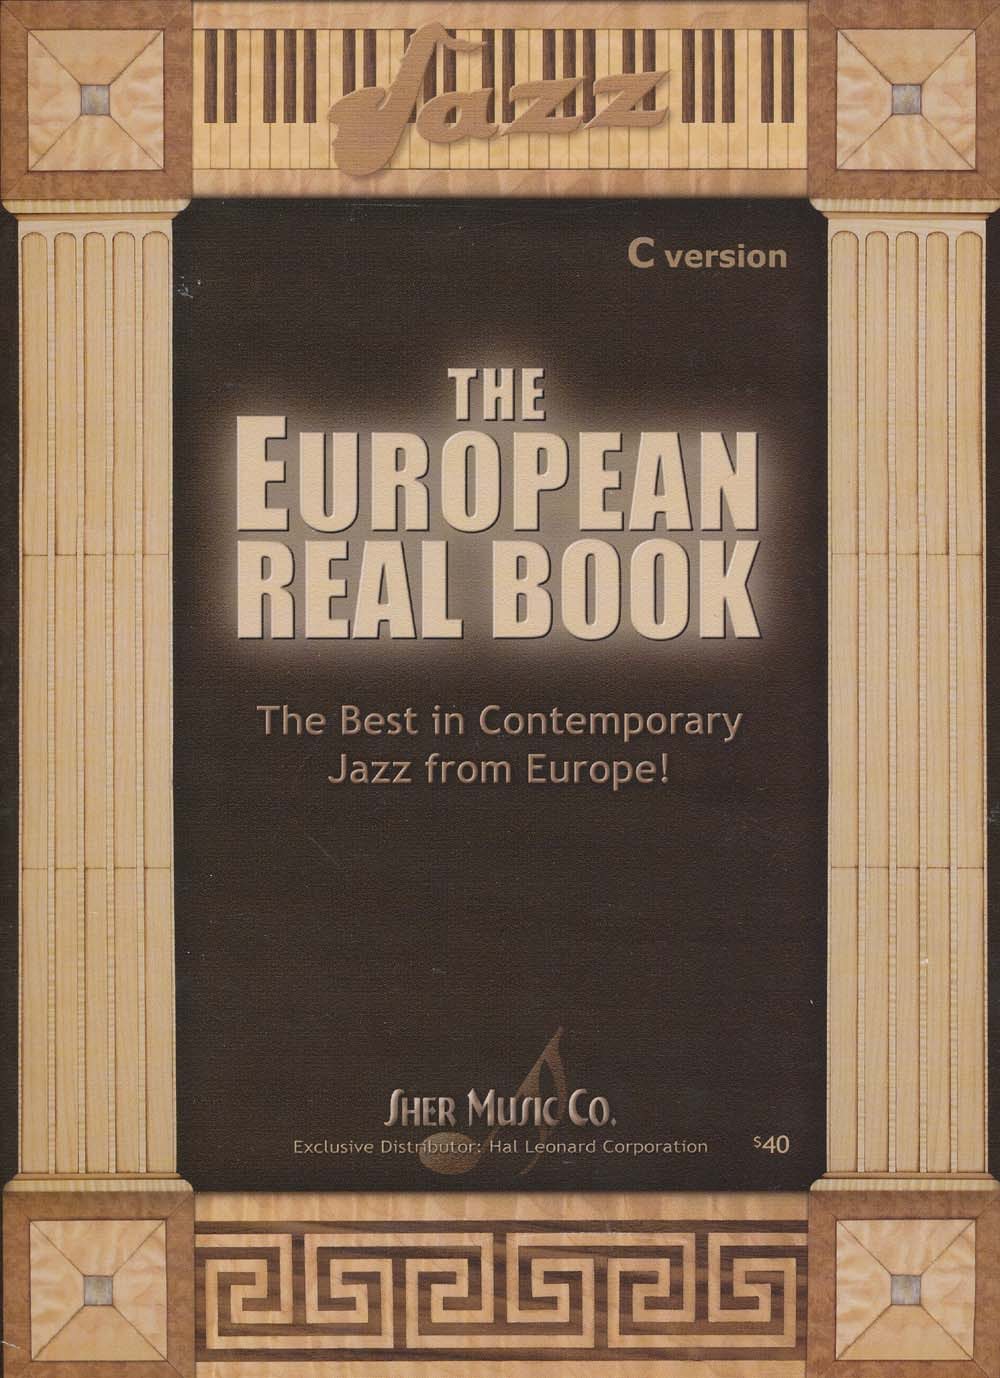 The European Real Book